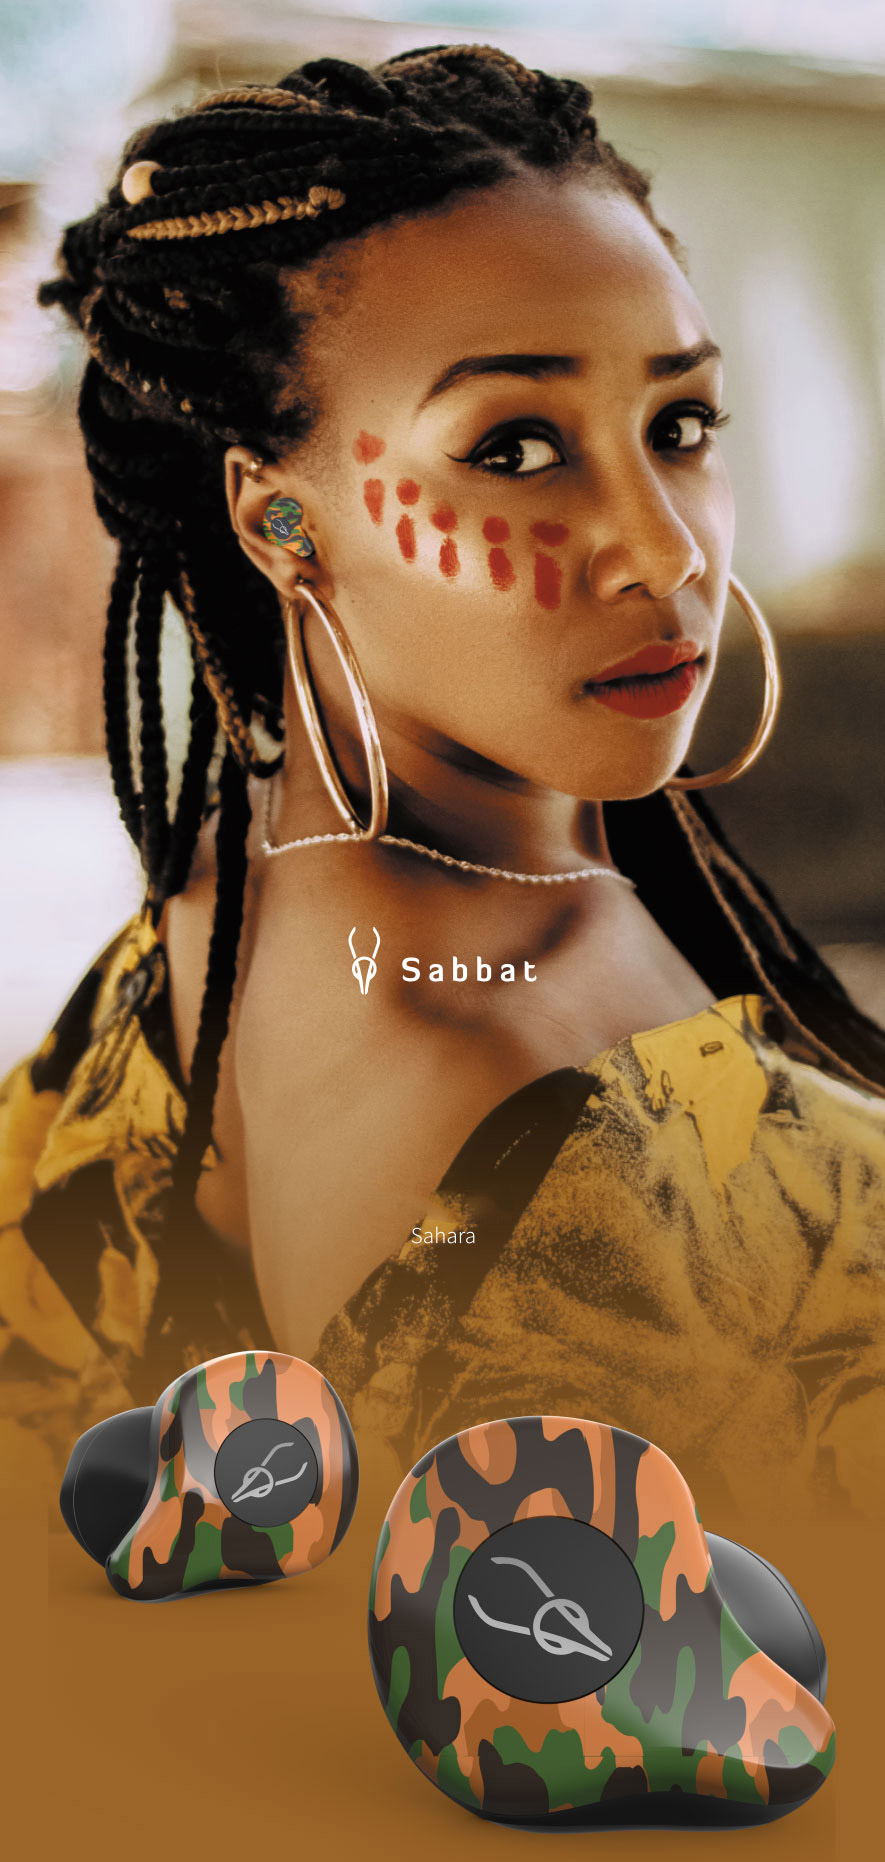 sabbat x12 ultra tws wireless earbuds